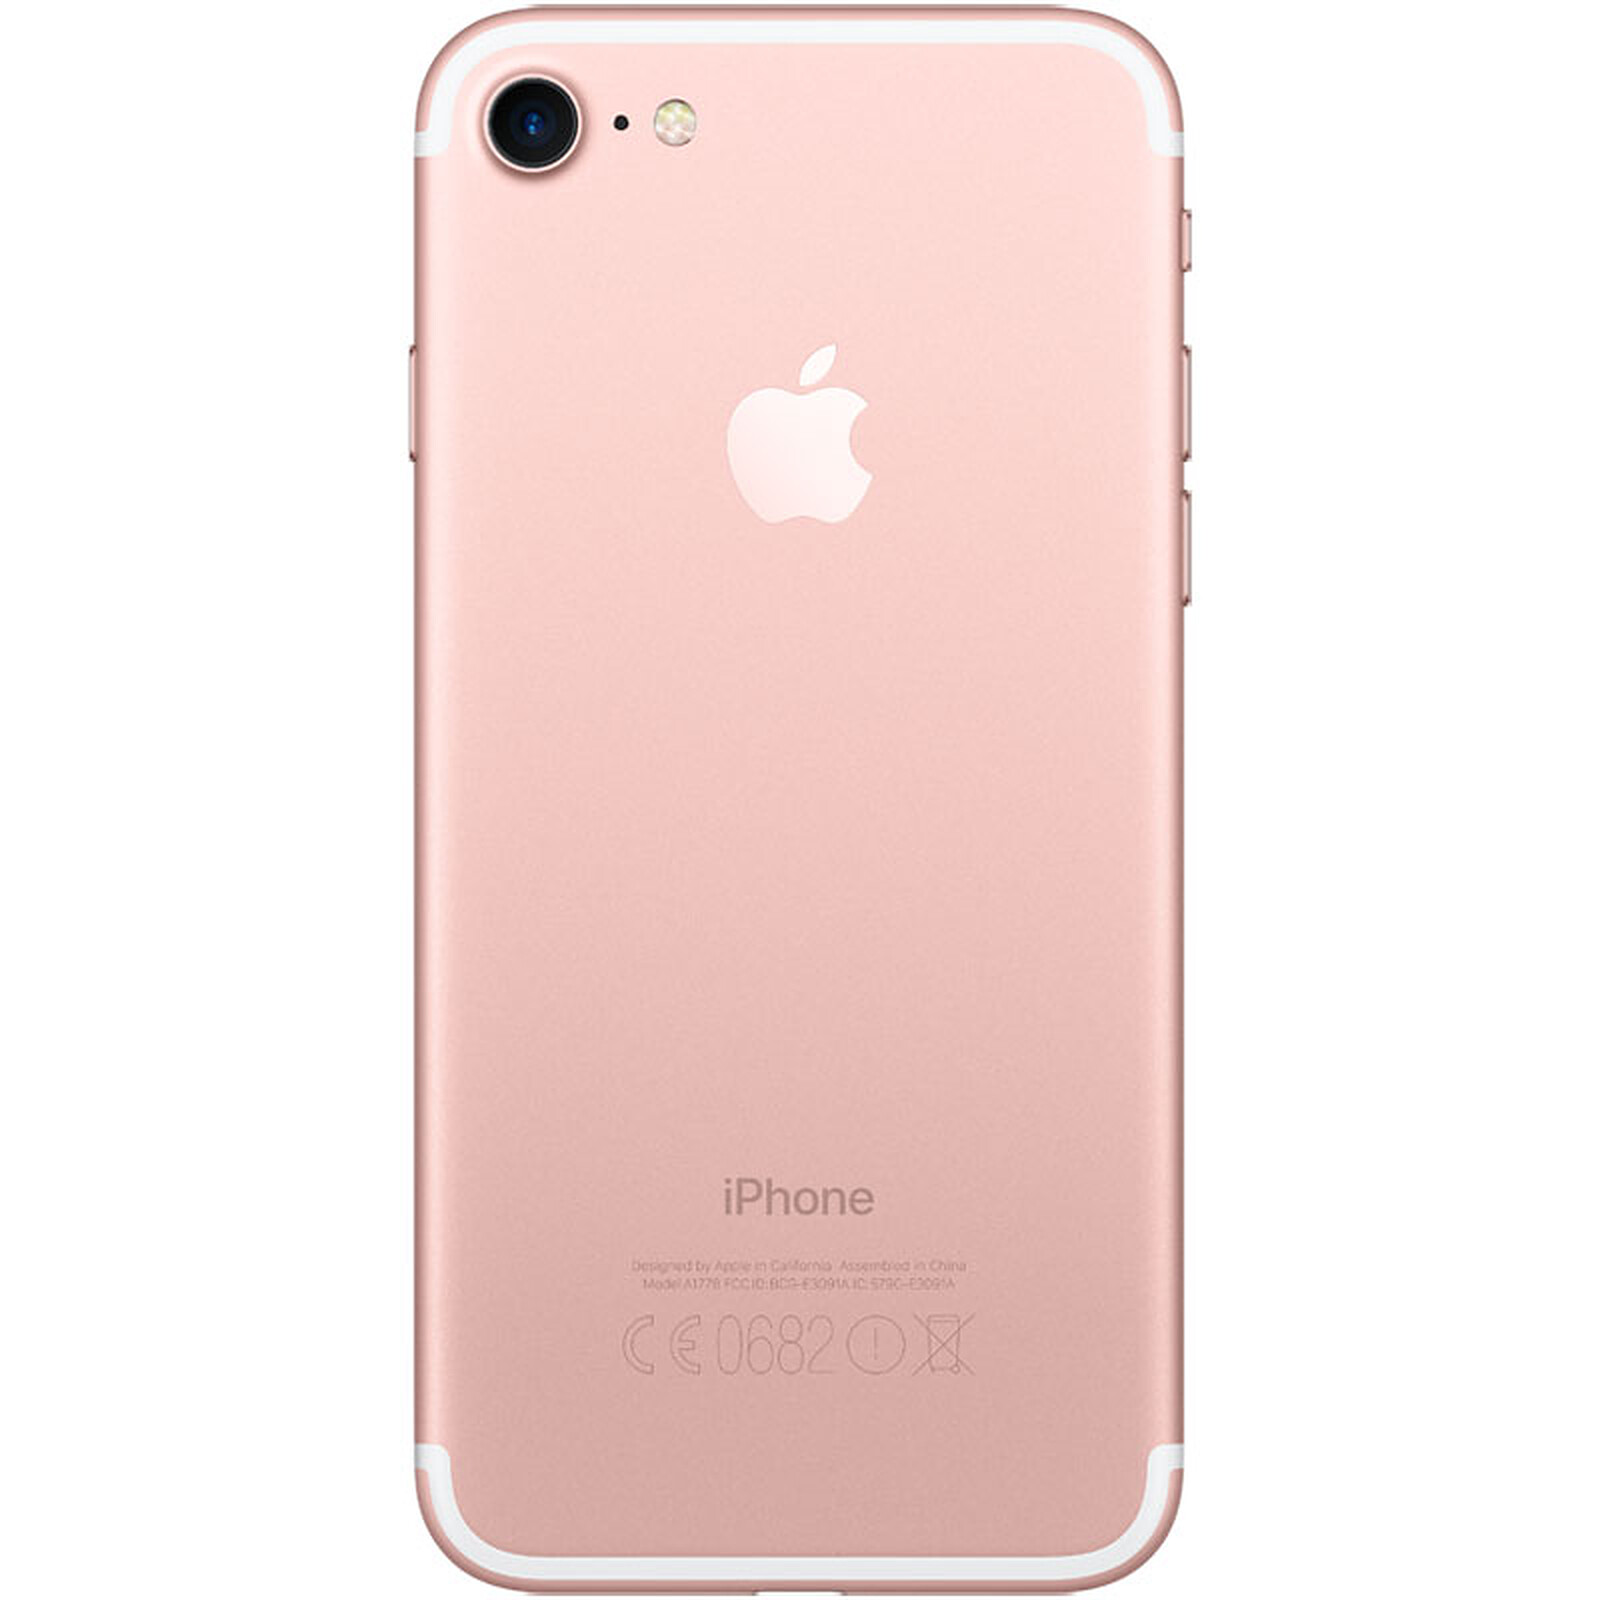 Apple iPhone 7 128GB Rose Gold - Mobile phone & smartphone - LDLC 